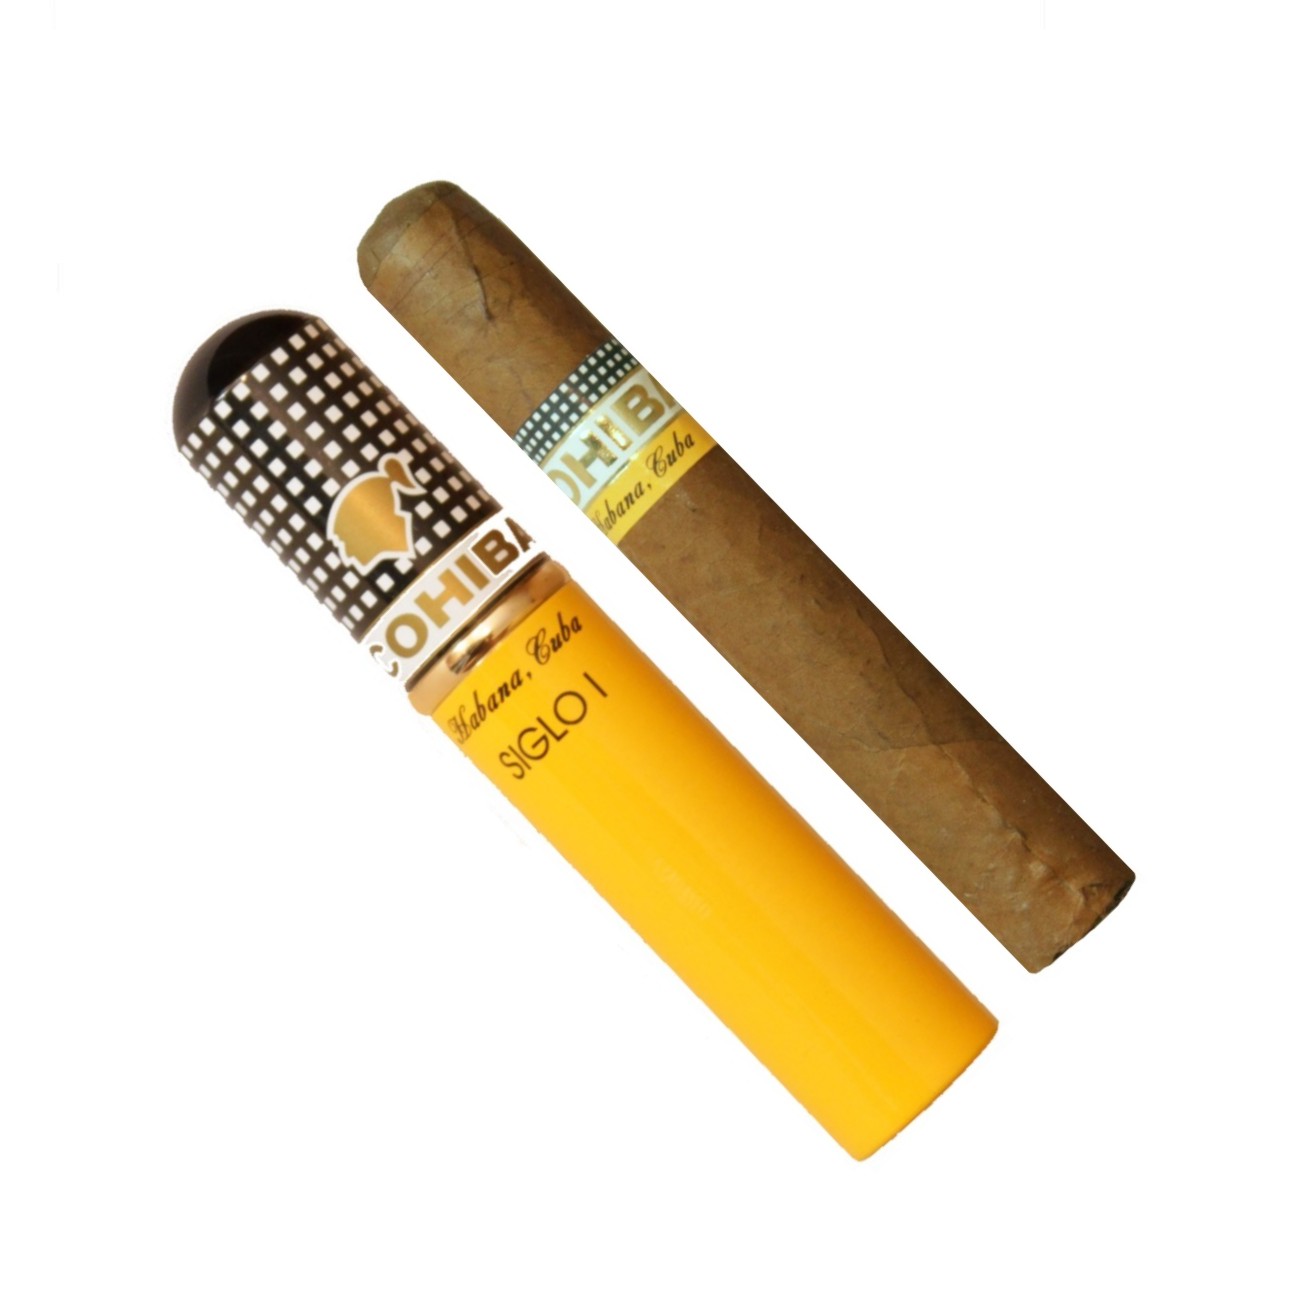 COHIBA Siglo i  Tubos Cigar,科伊巴高希霸世纪1号铝管装(筒裝)雪茄